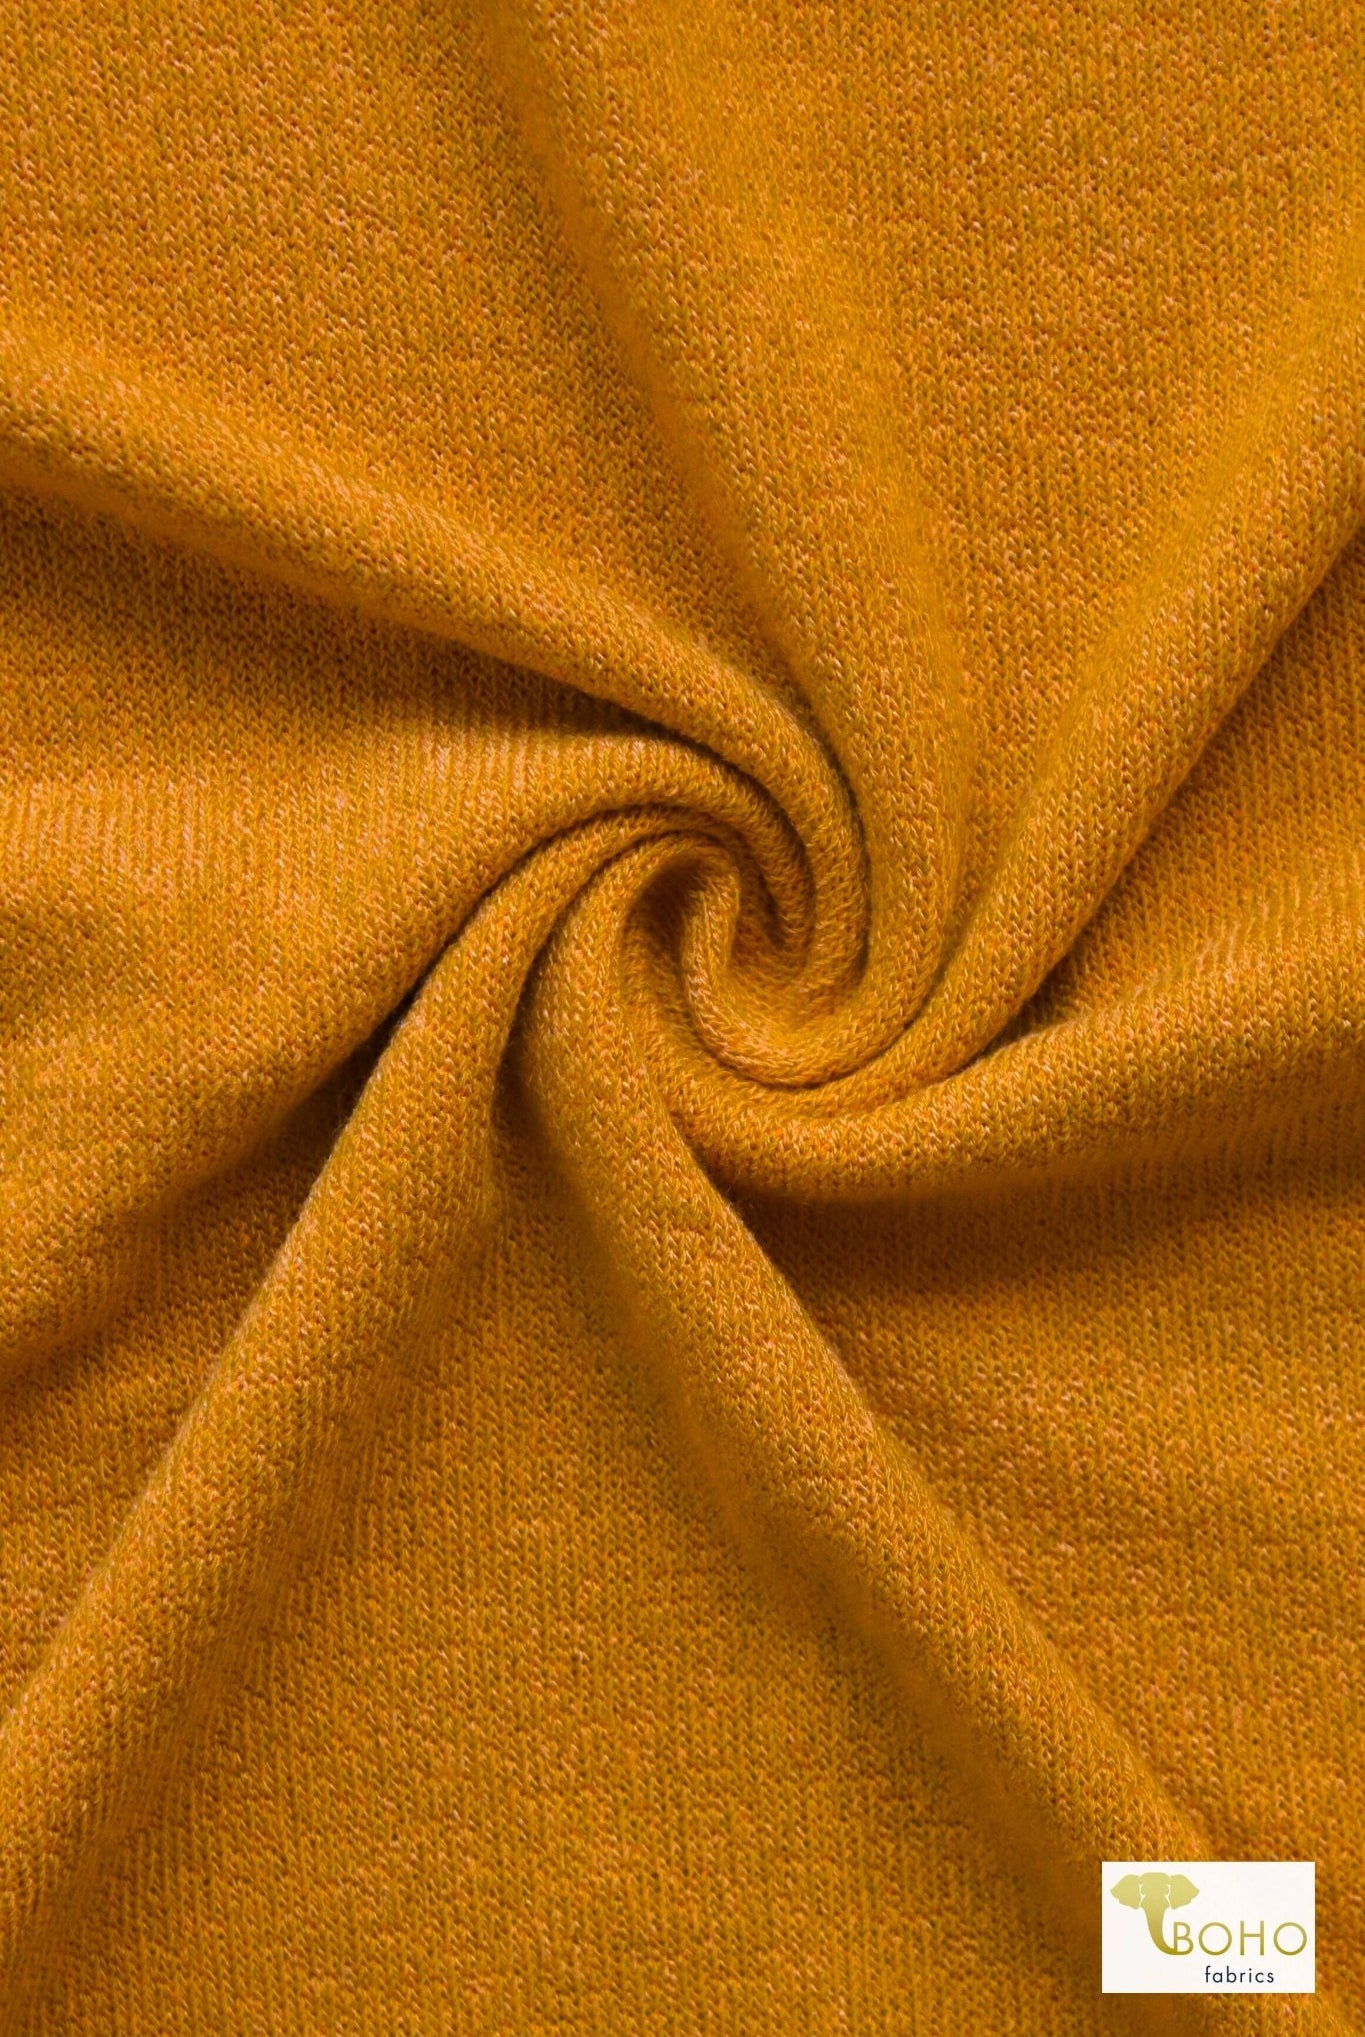 Saffron Gold, Solid Sweater Knit Fabric - Boho Fabrics